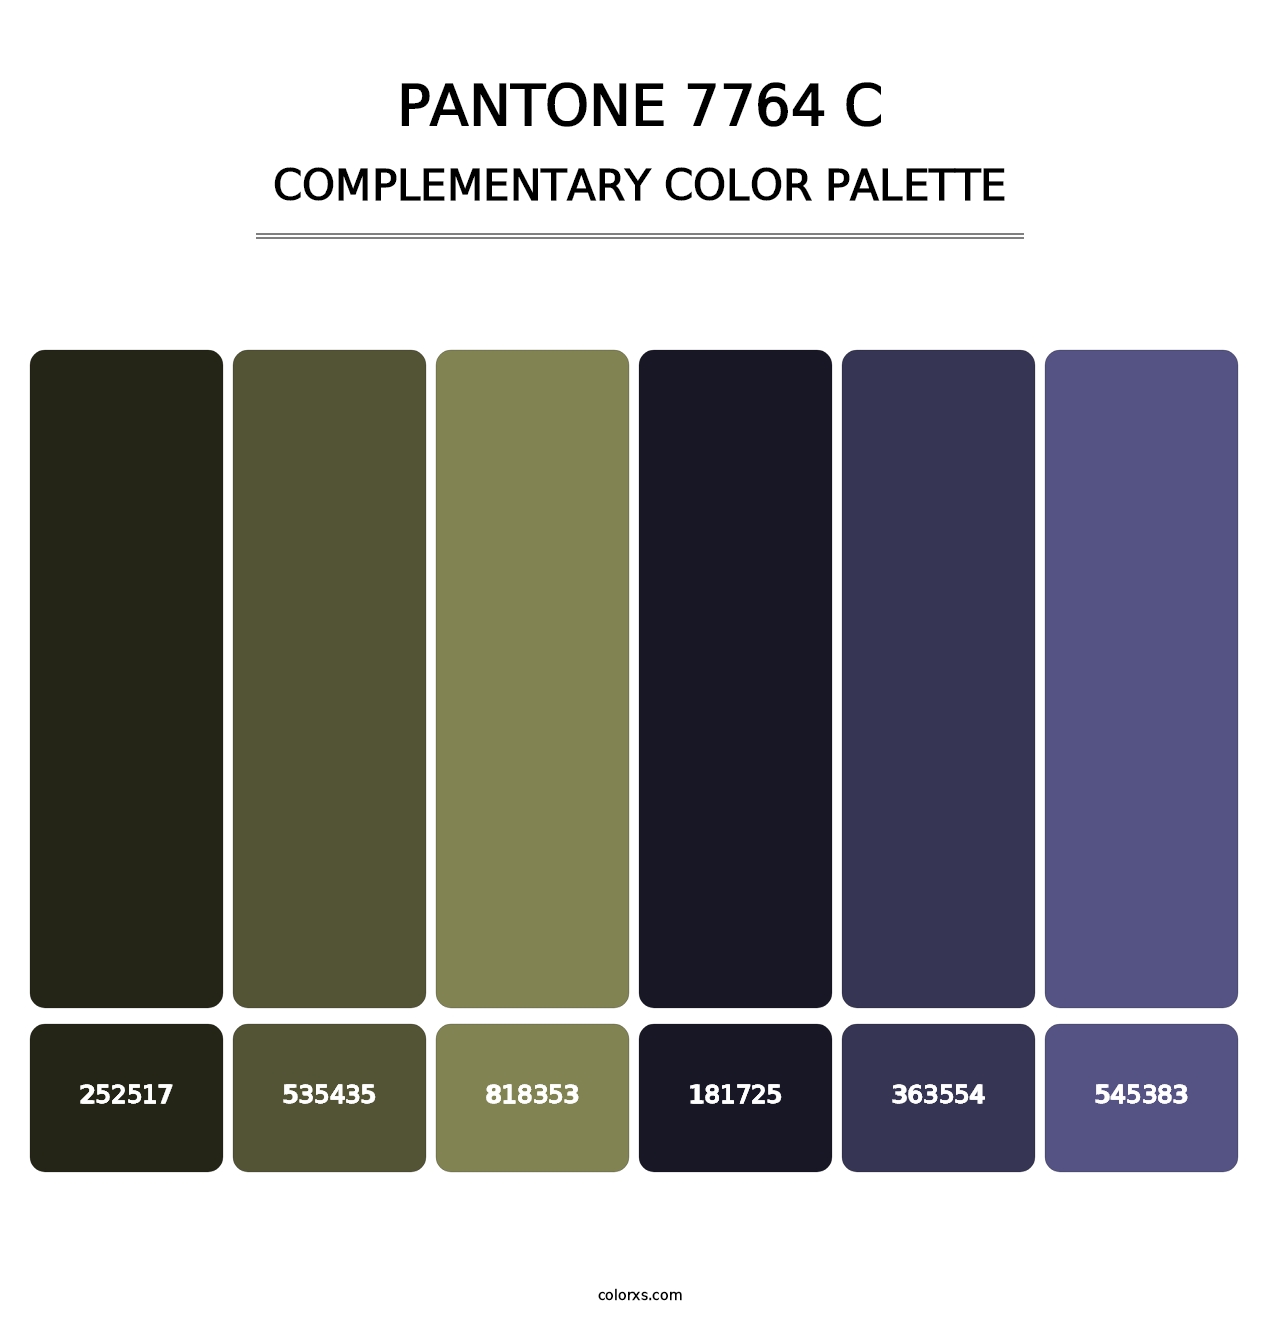 PANTONE 7764 C - Complementary Color Palette